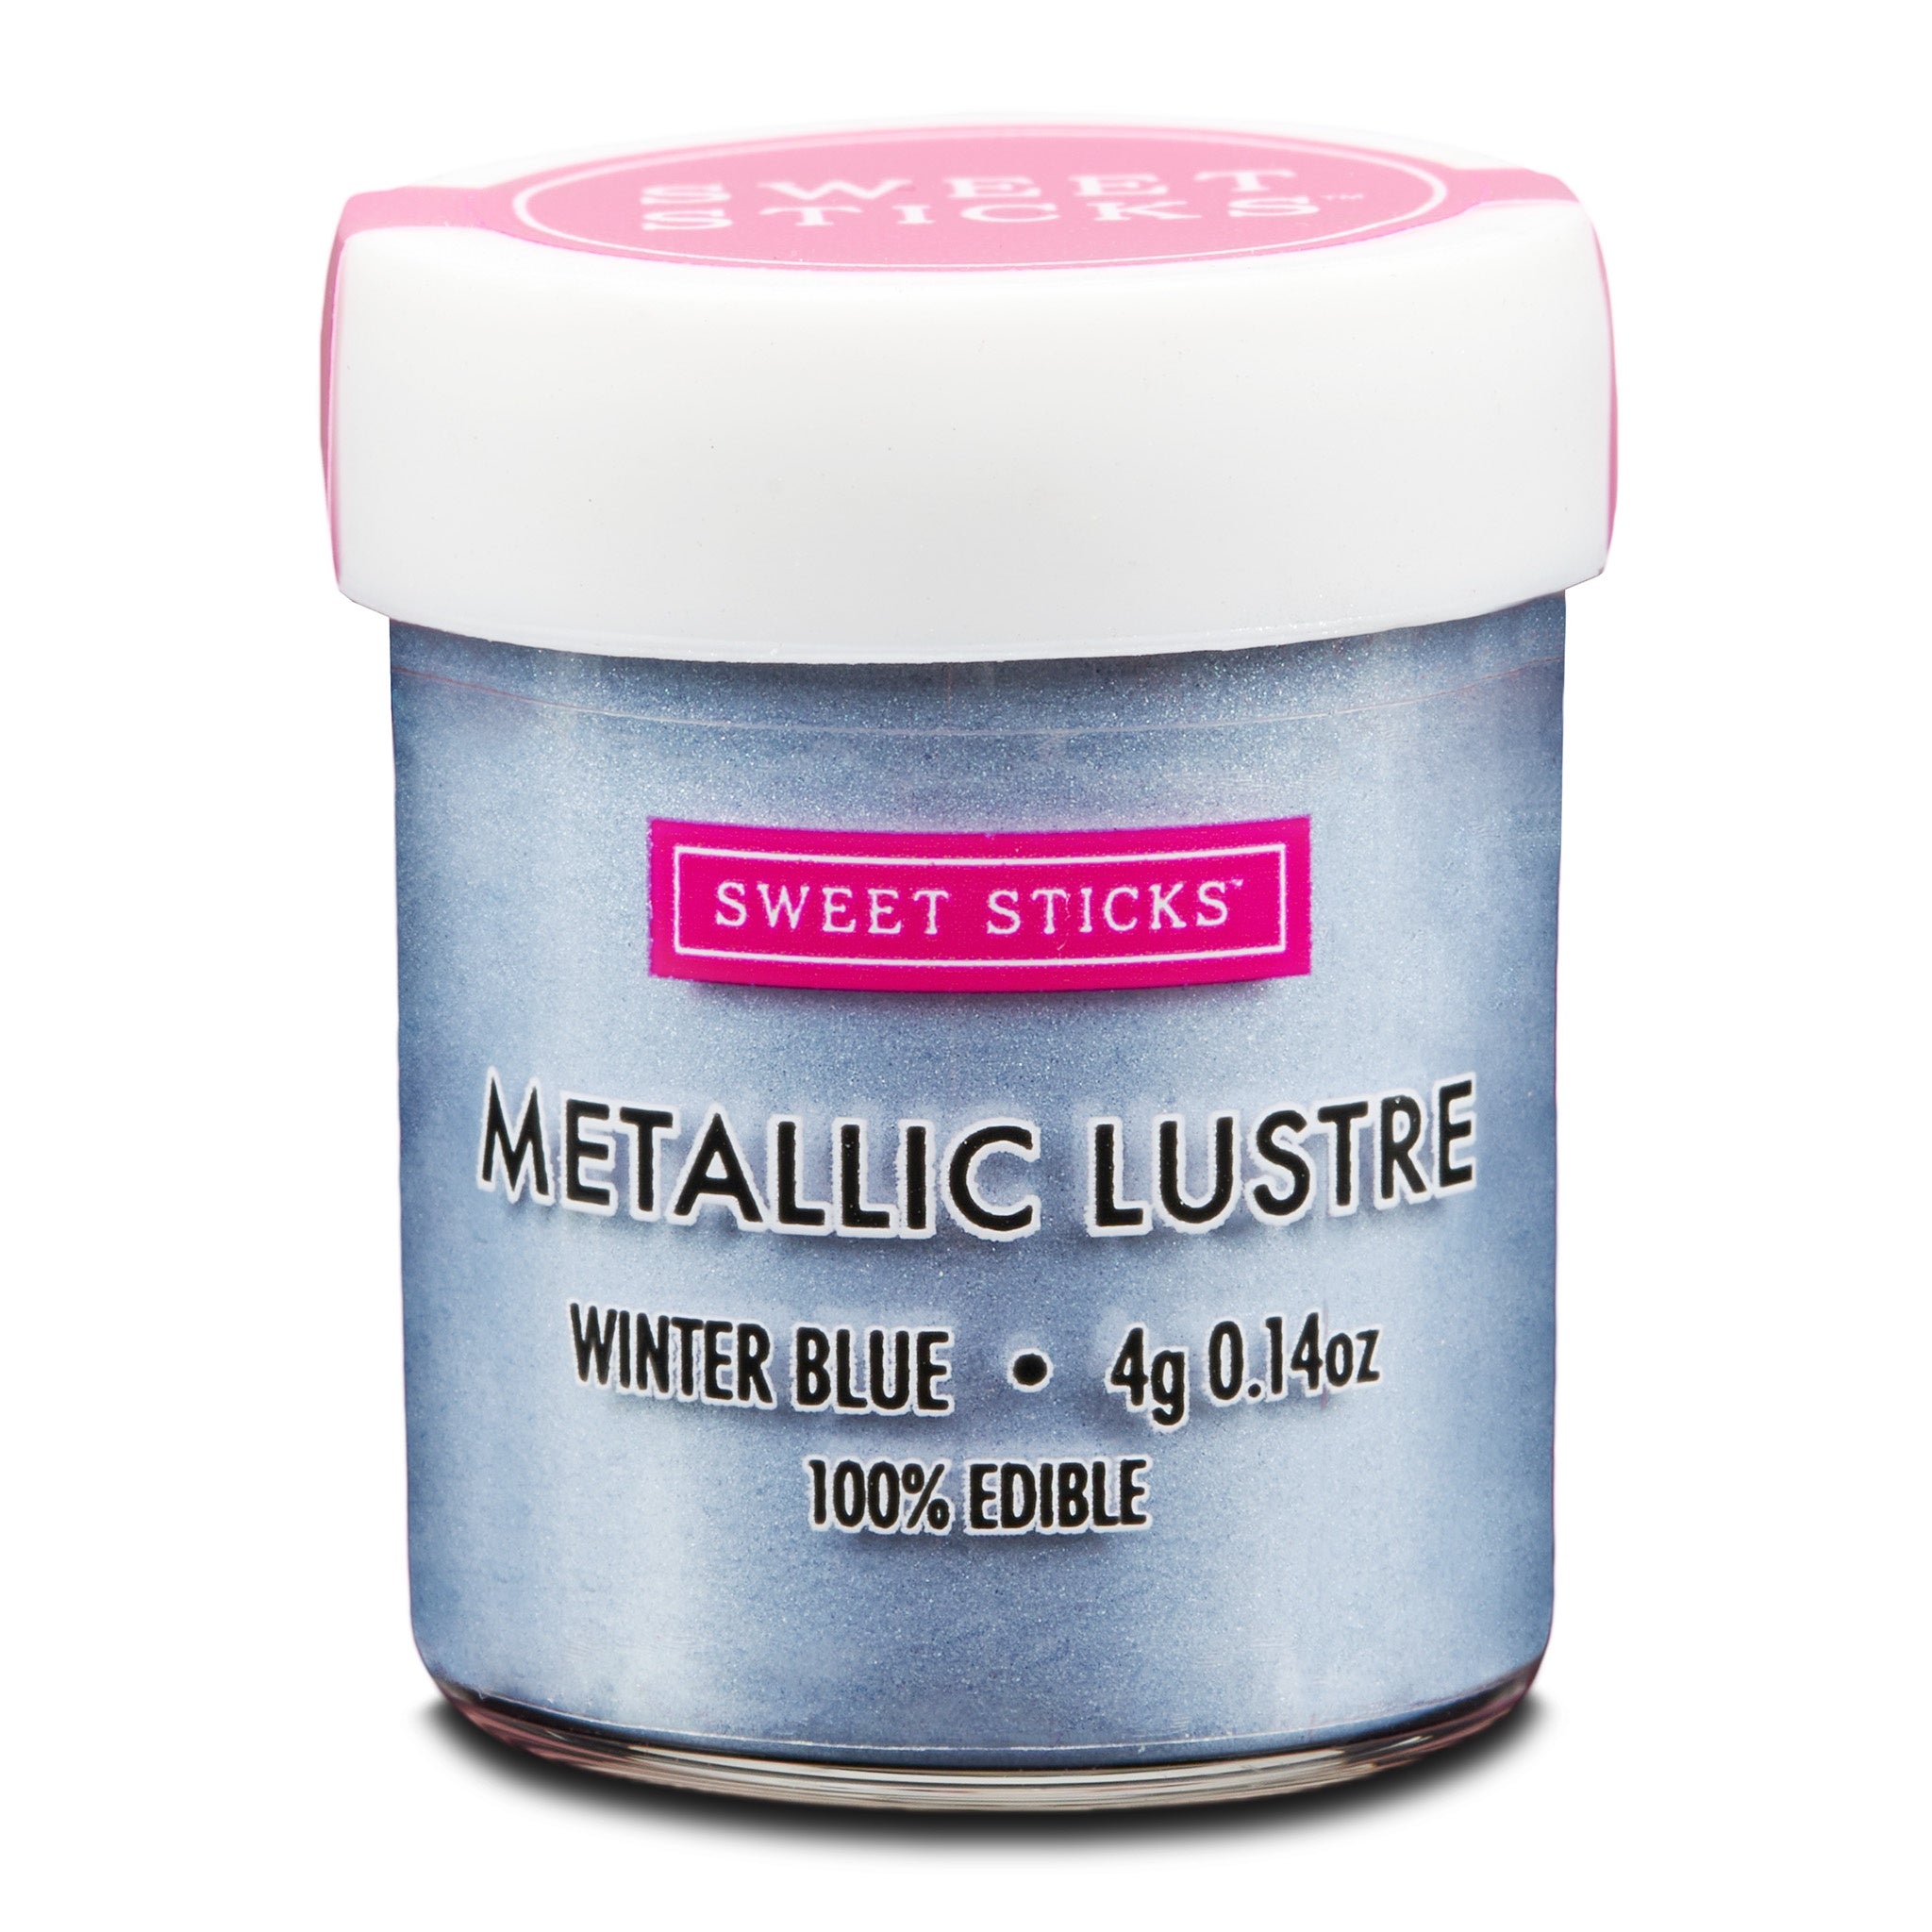 Sweet Sticks Metallic Lustre 4g - Winter Blue